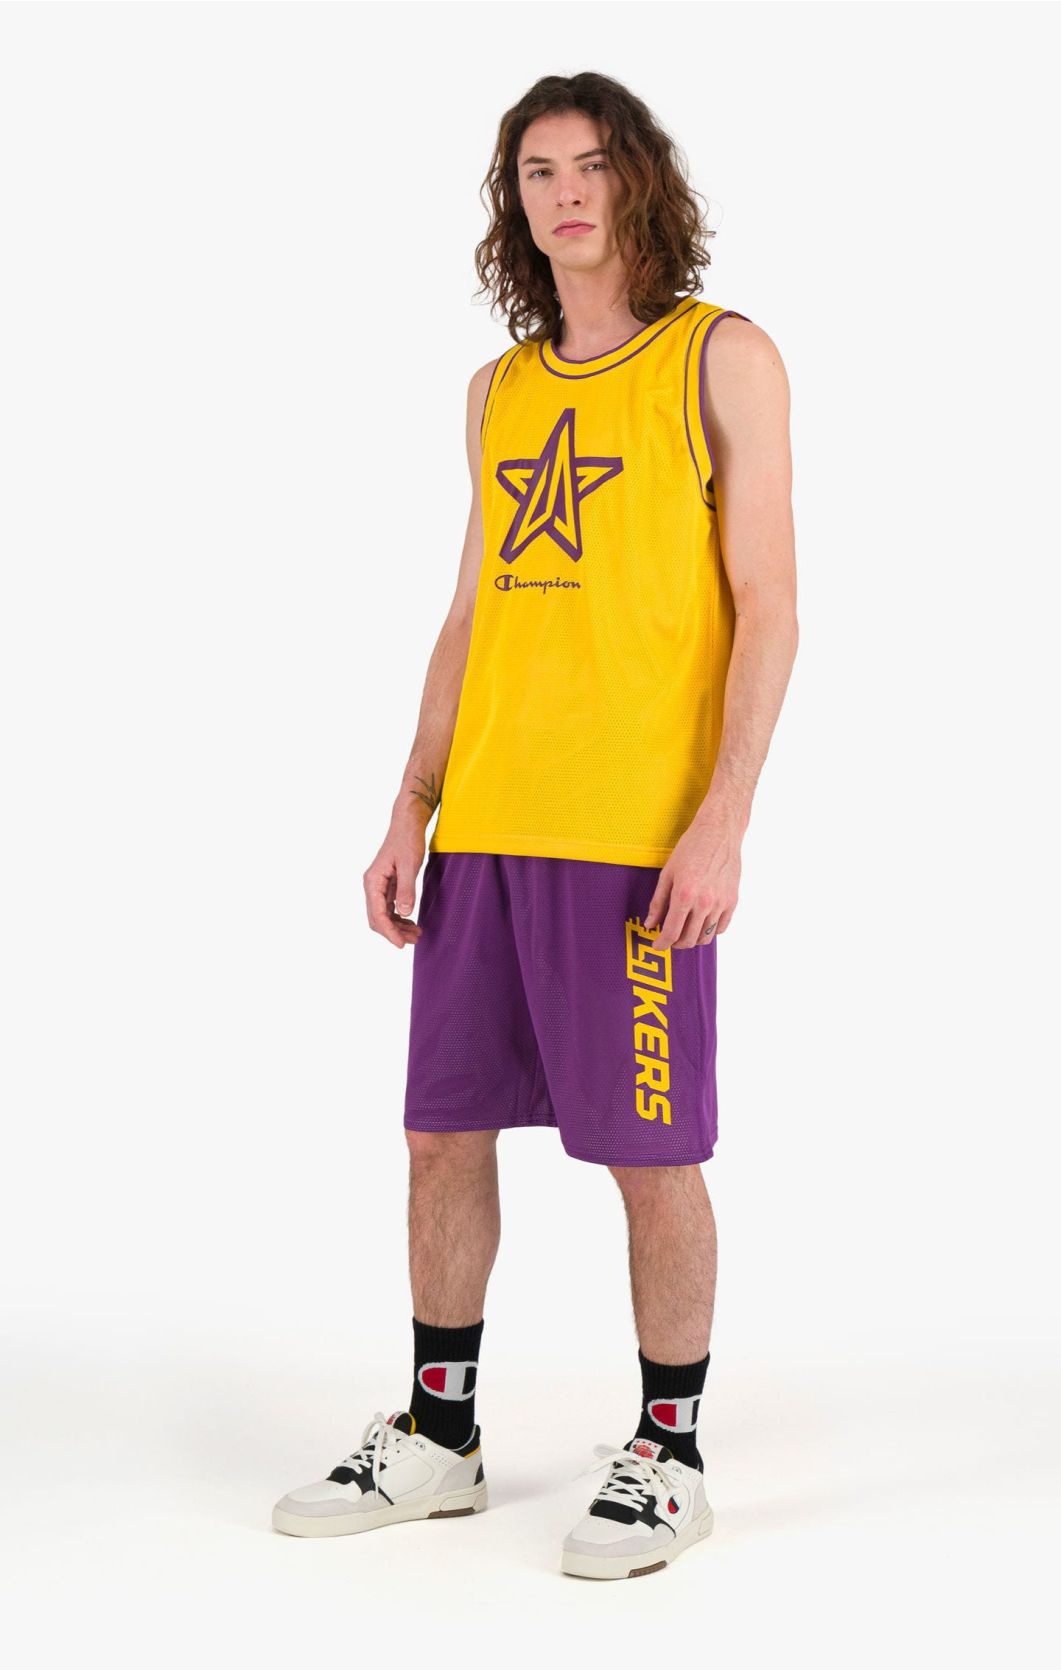 lakers basketball jersey and shorts